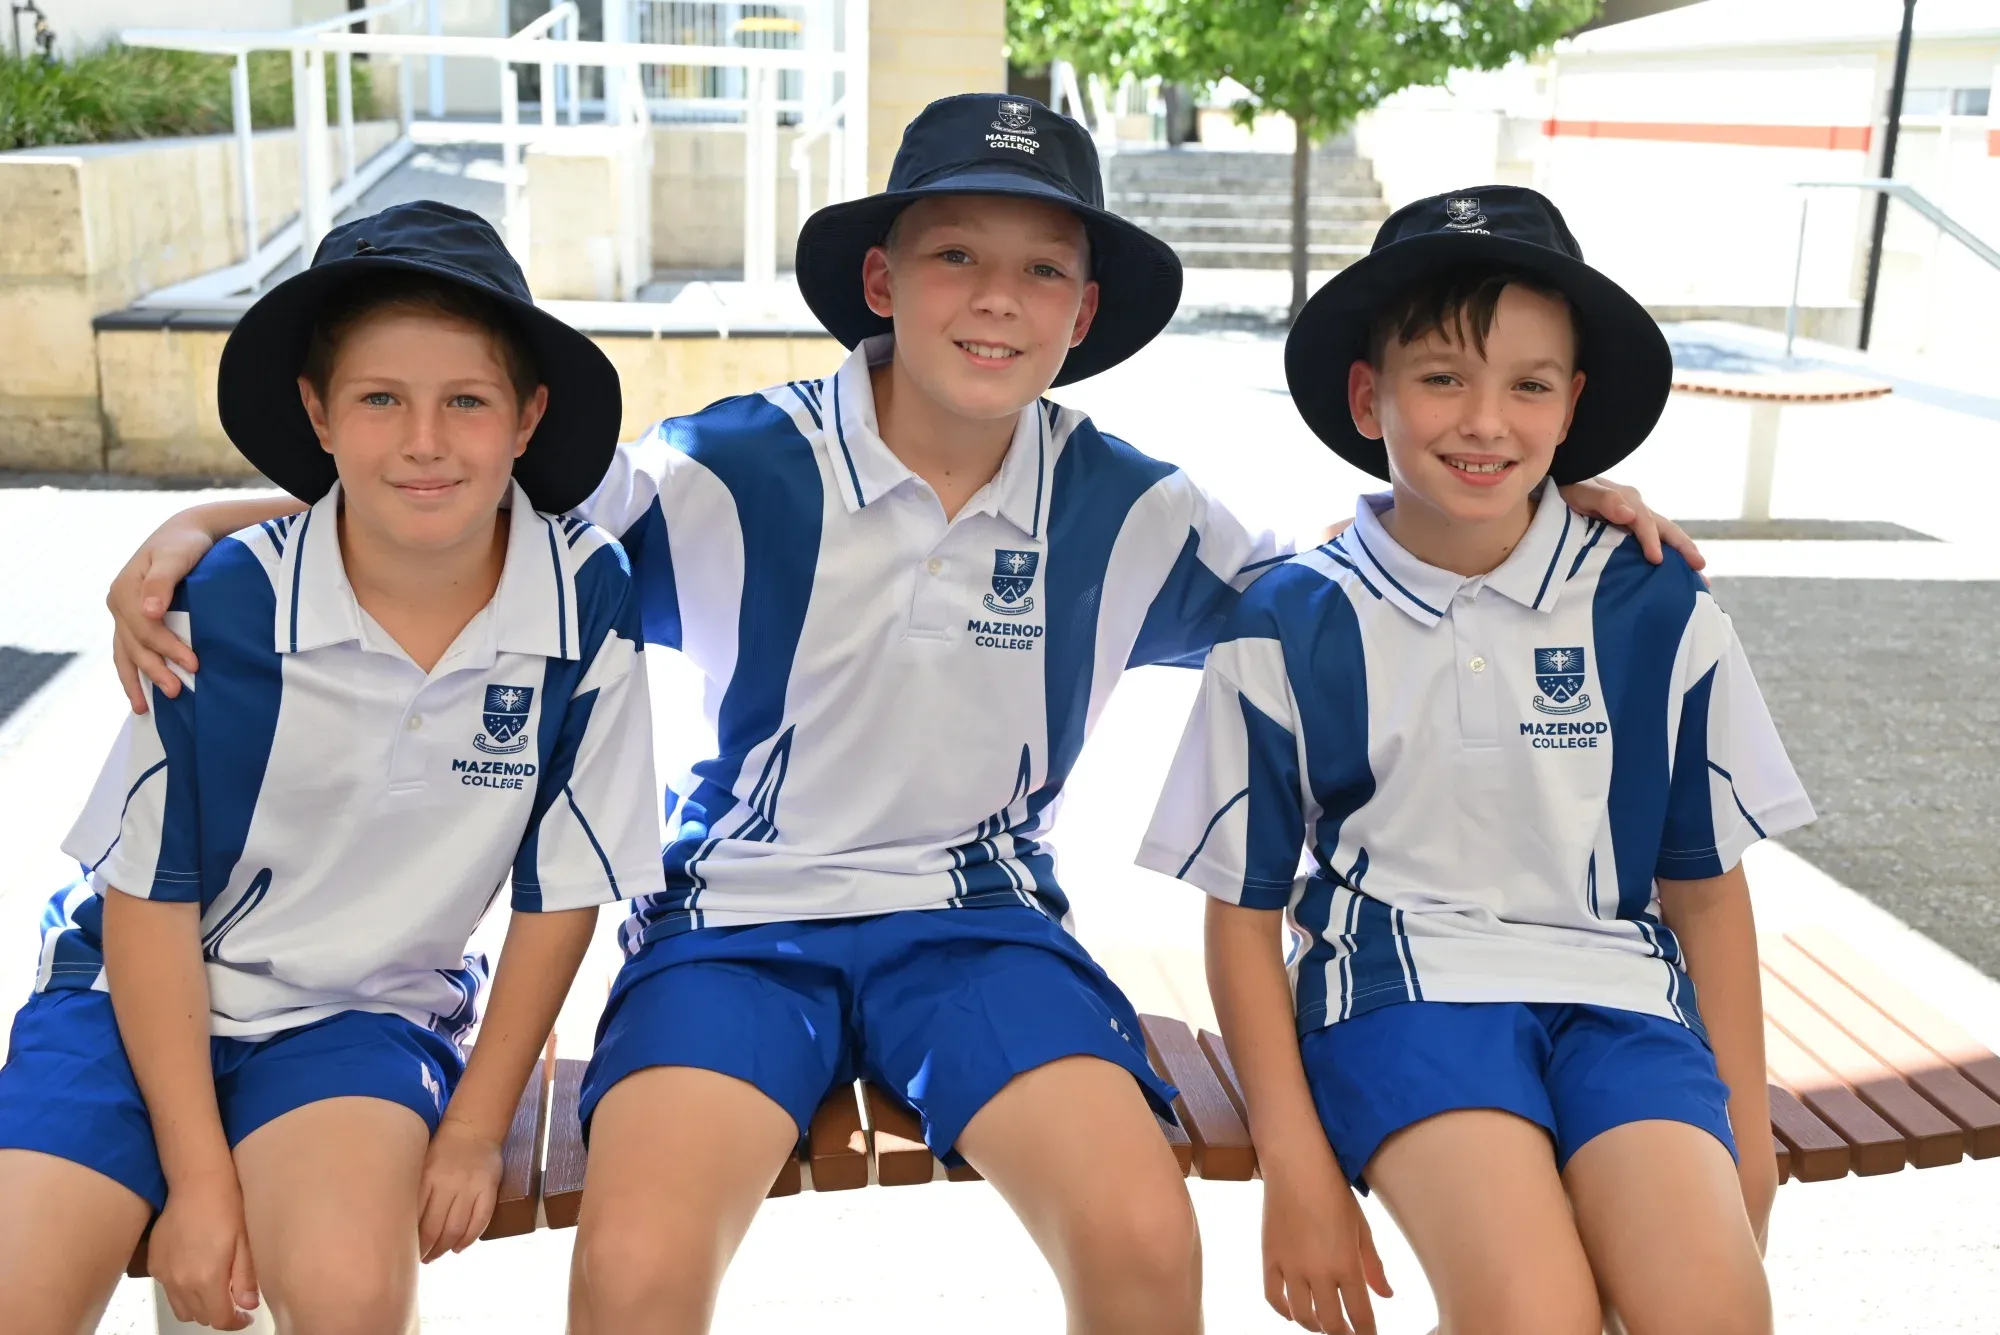 A group of three students at Mazenod College Perth WA